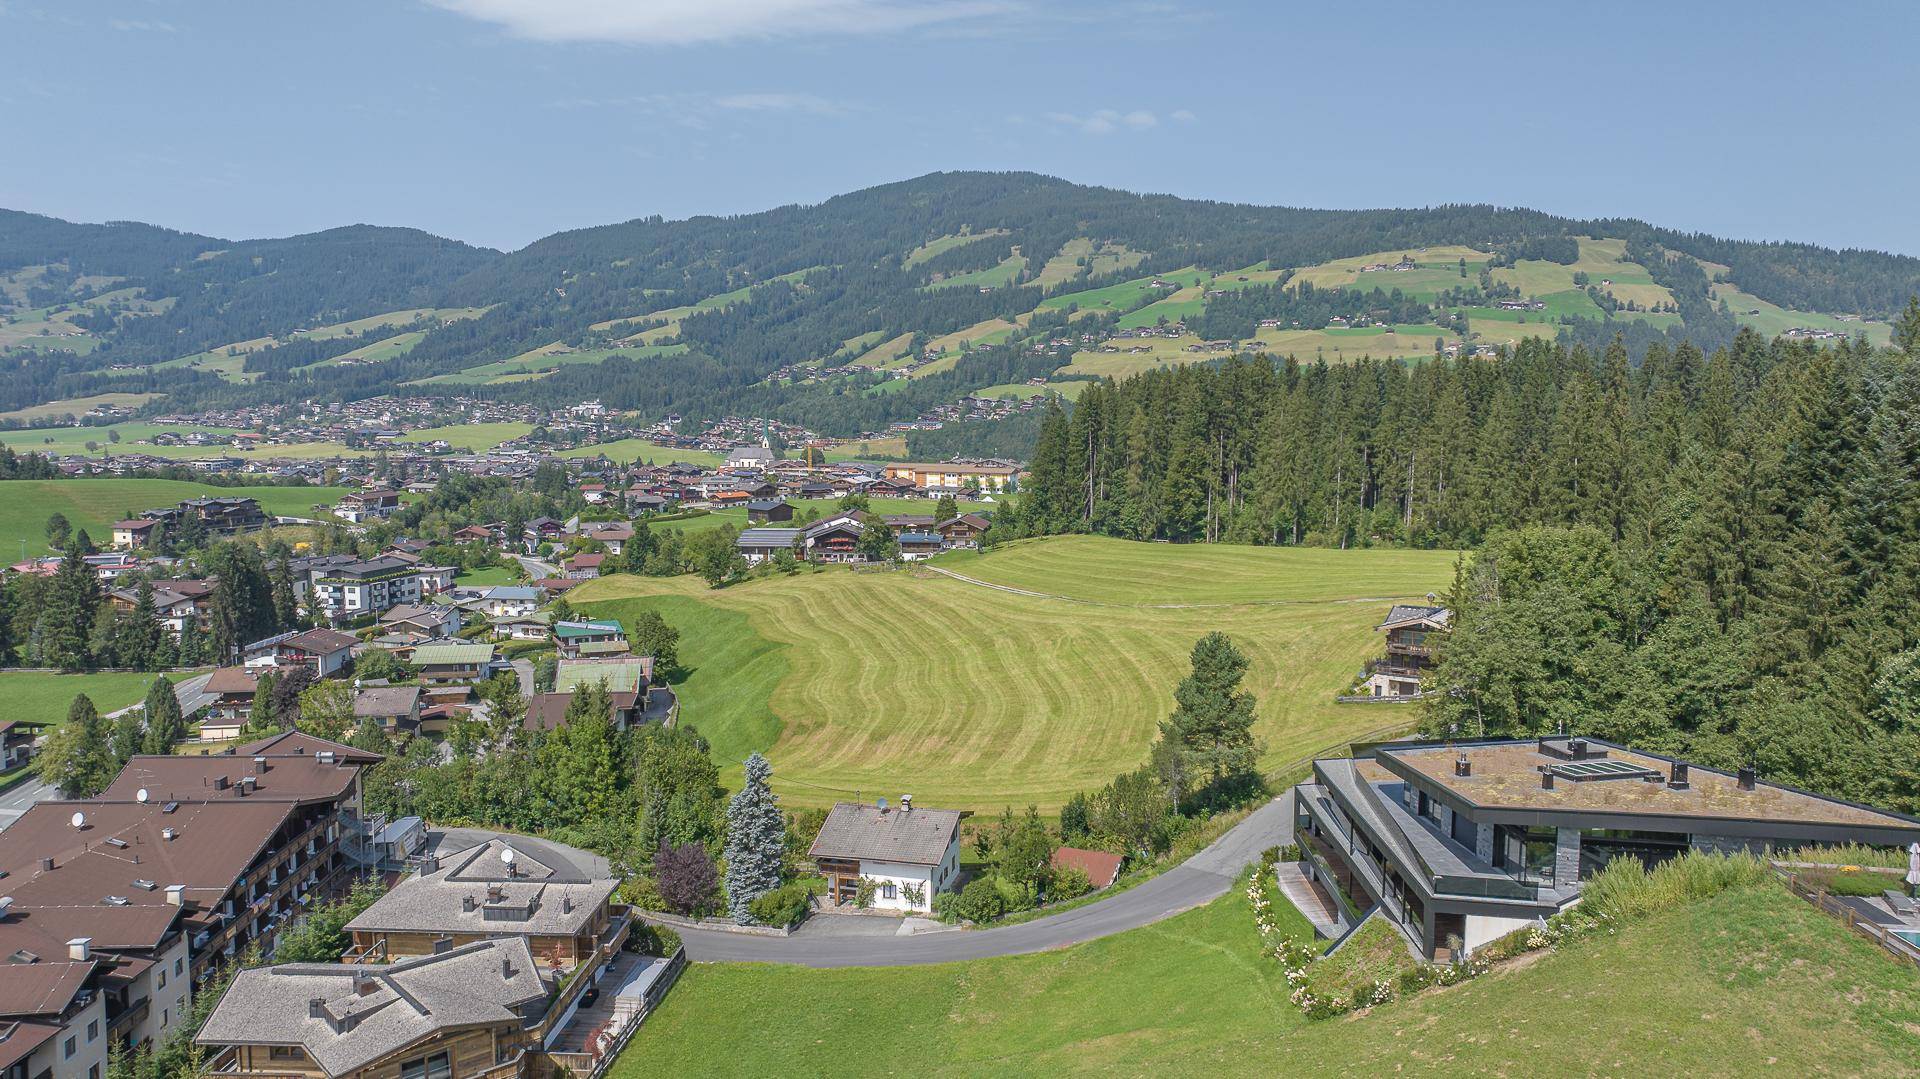 KITZIMMO-Neubauwohnung am Skilift kaufen - Immobilien Kirchberg Tirol.